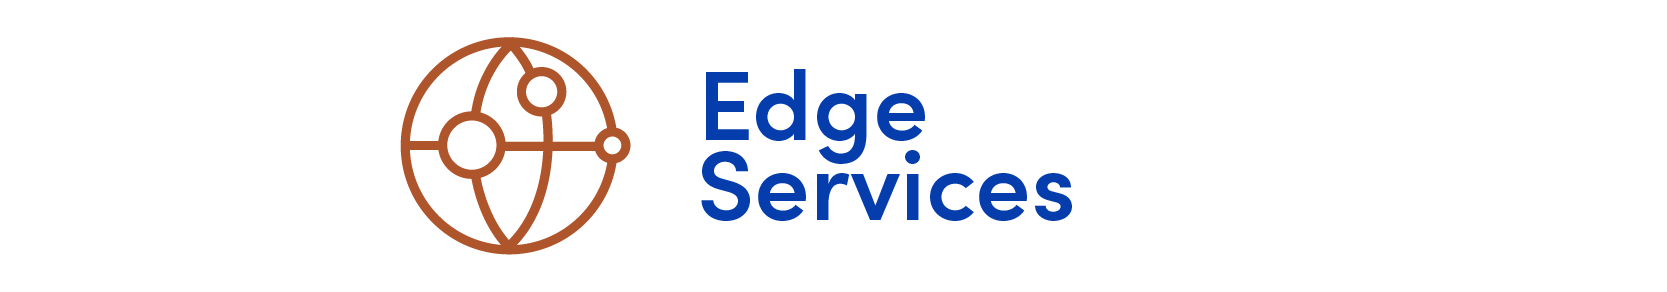 TC Web_IAAS Headings-edge-services